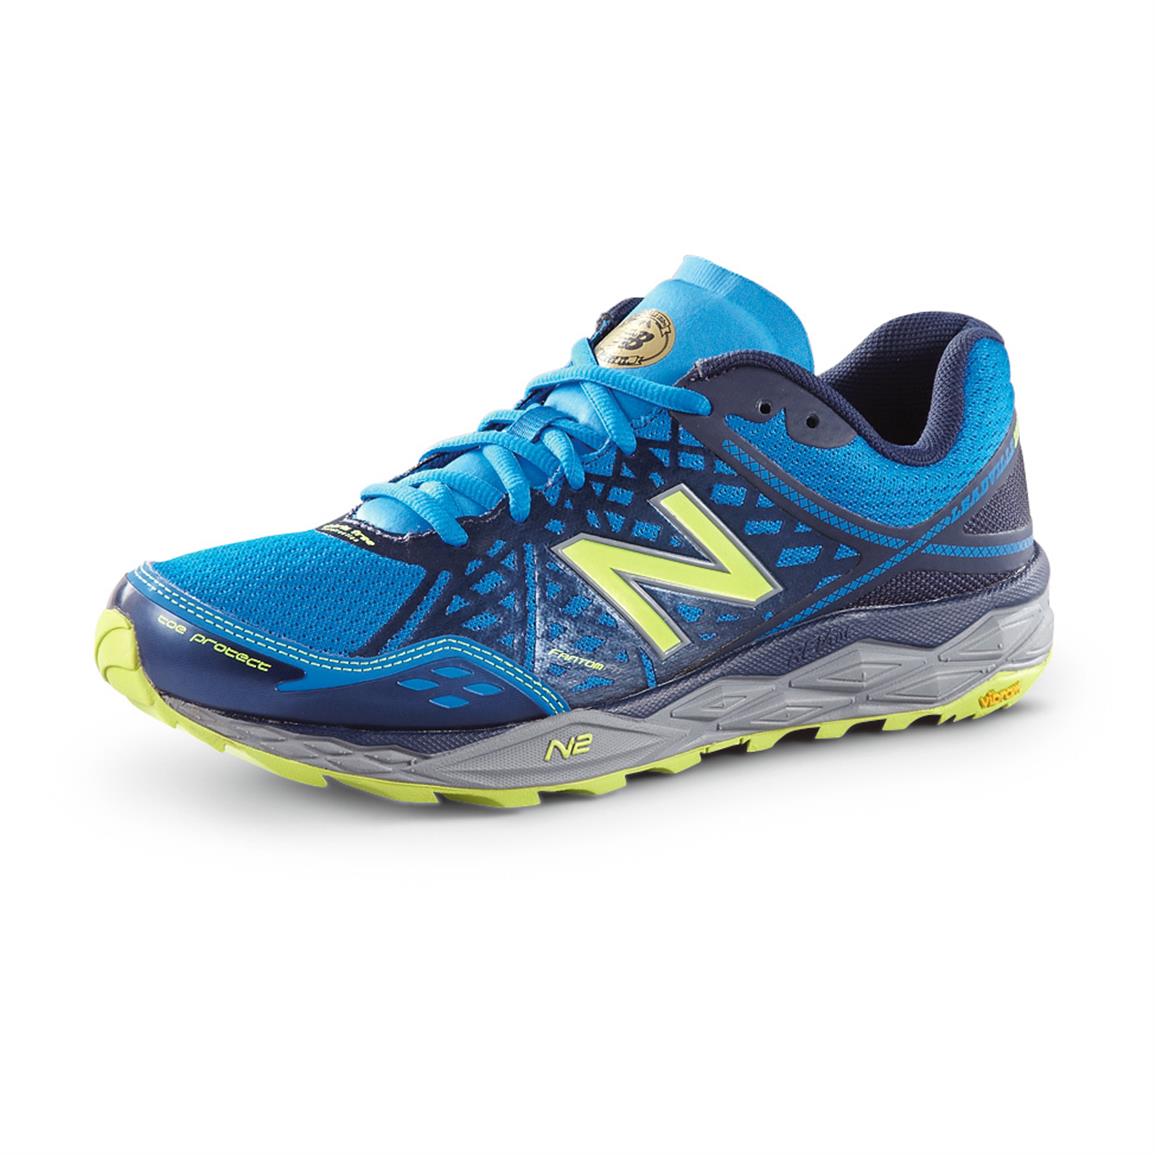 New Balance MT1210 Trail Running Shoe - 641053, Running Shoes ...